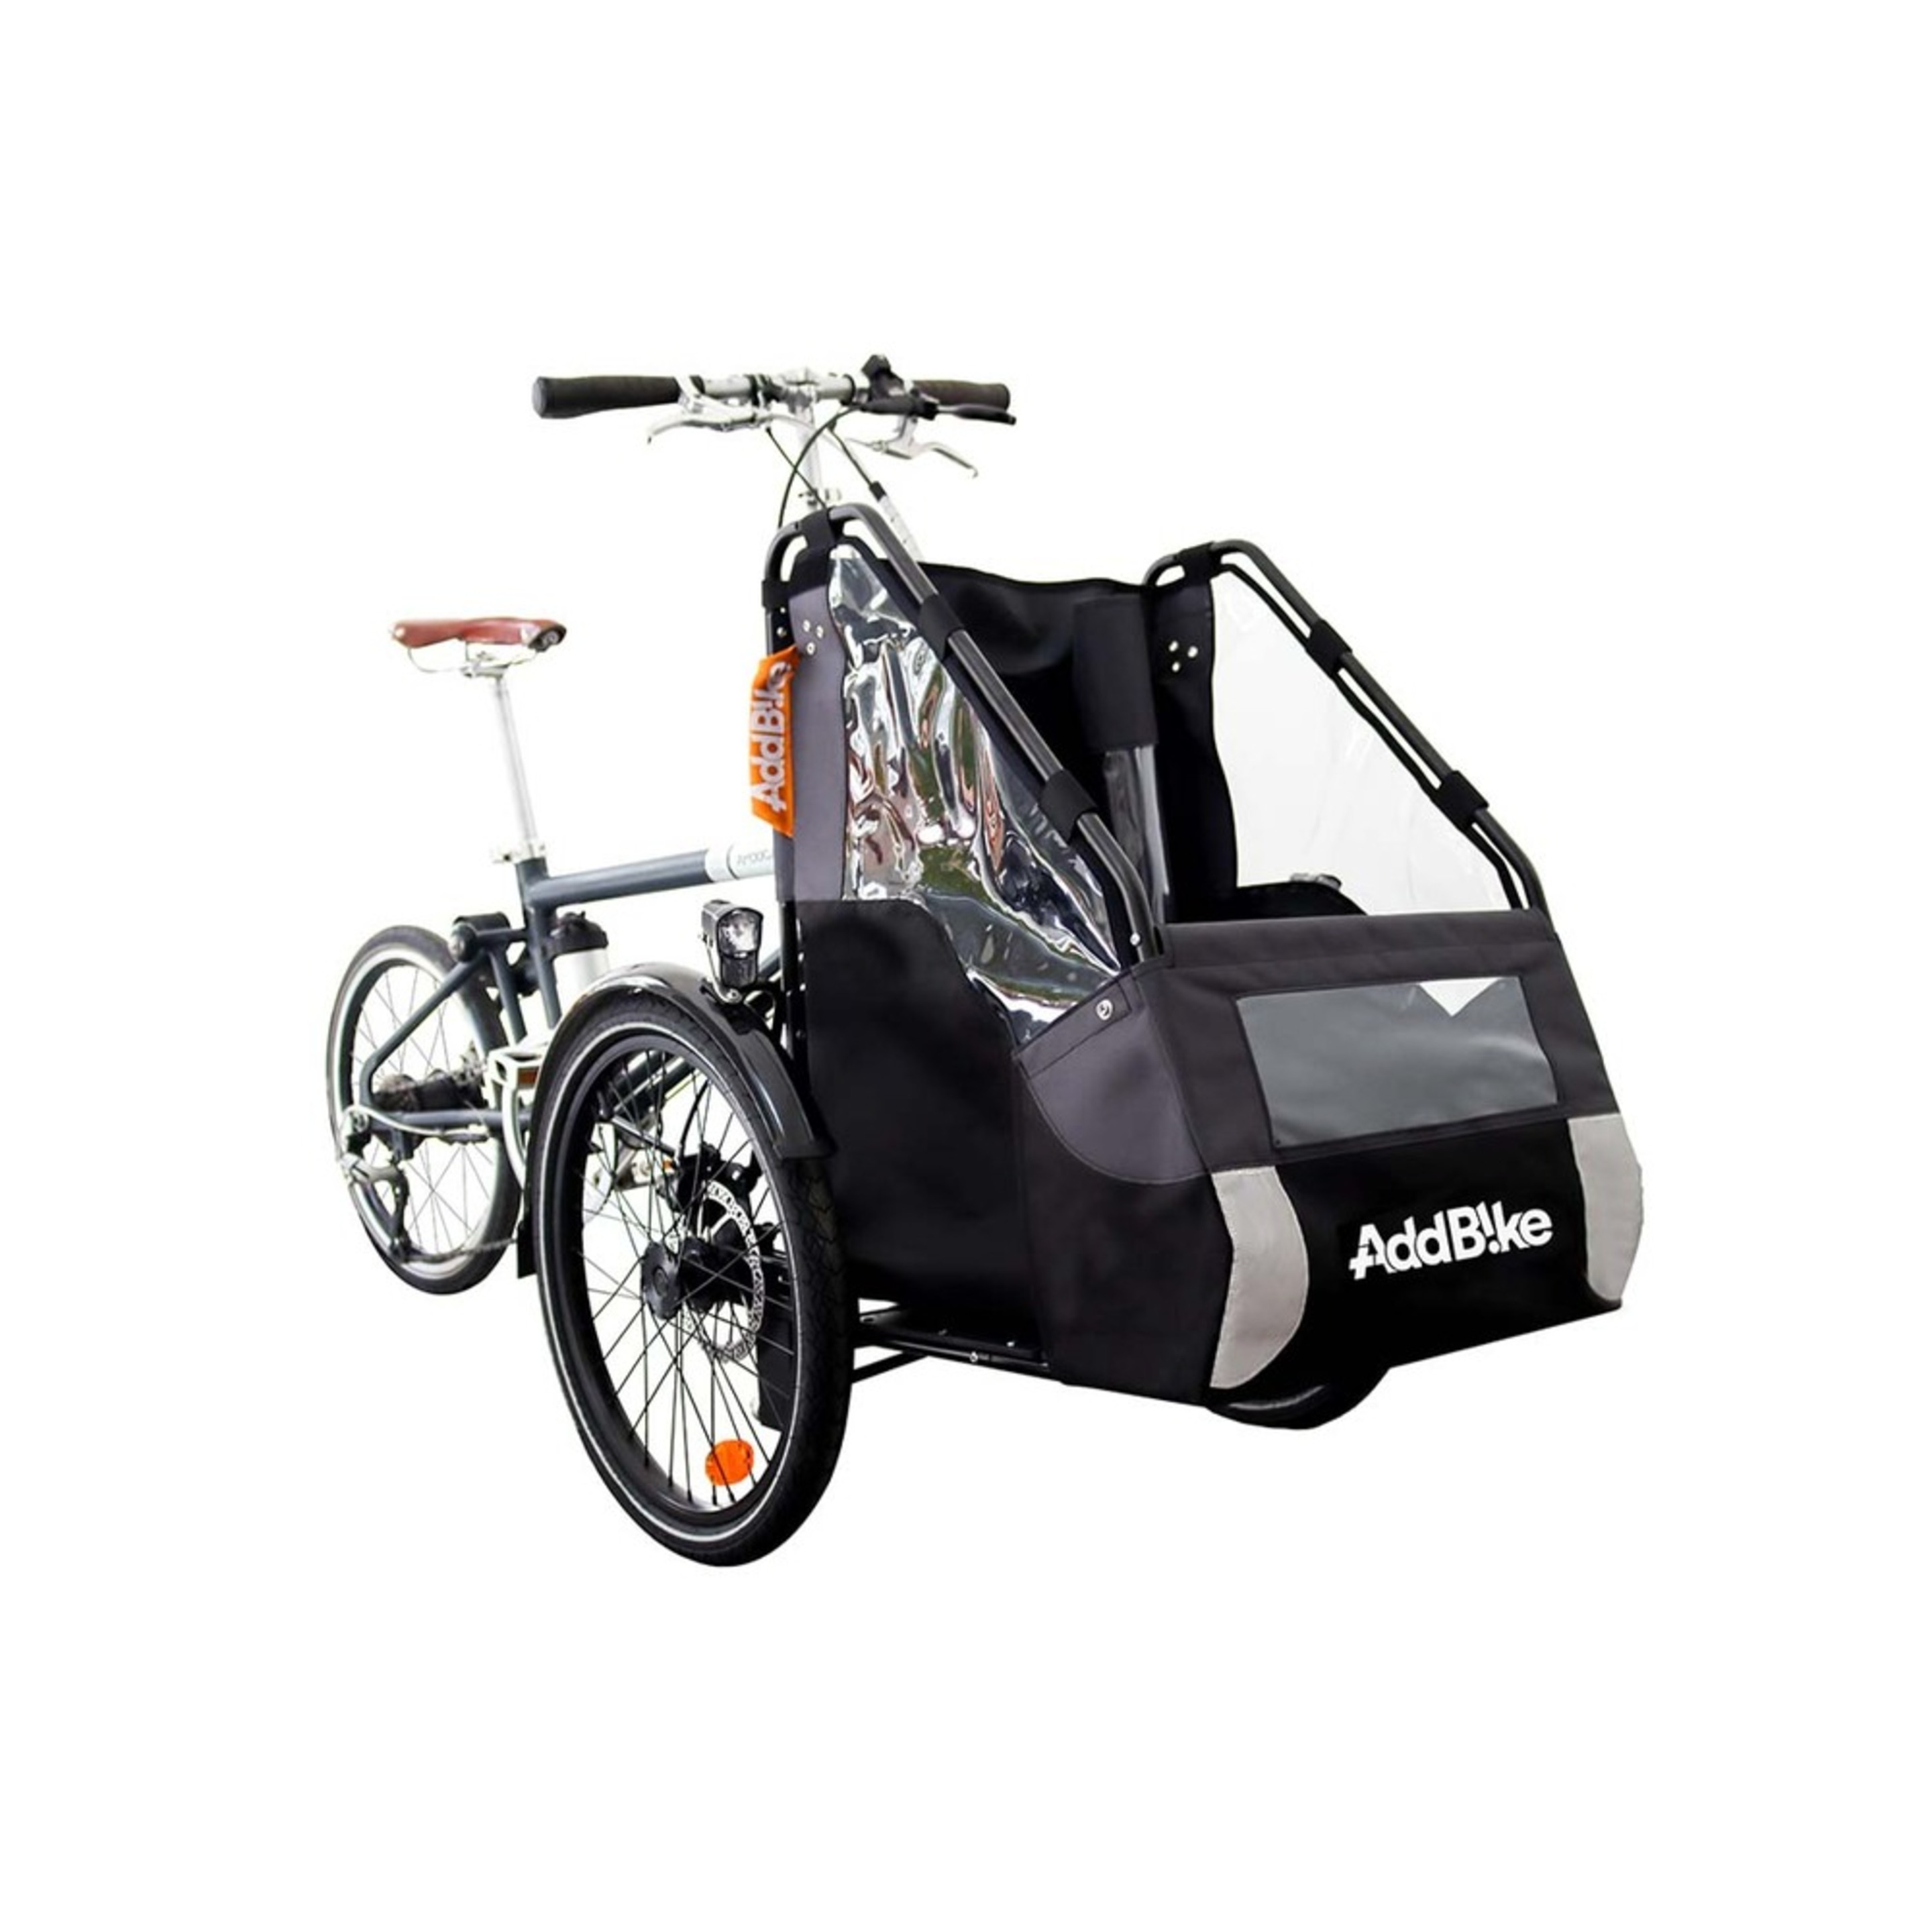 Kit Frontal: Transport Cachorro - Addbike Dog Kit - gris-negro - 